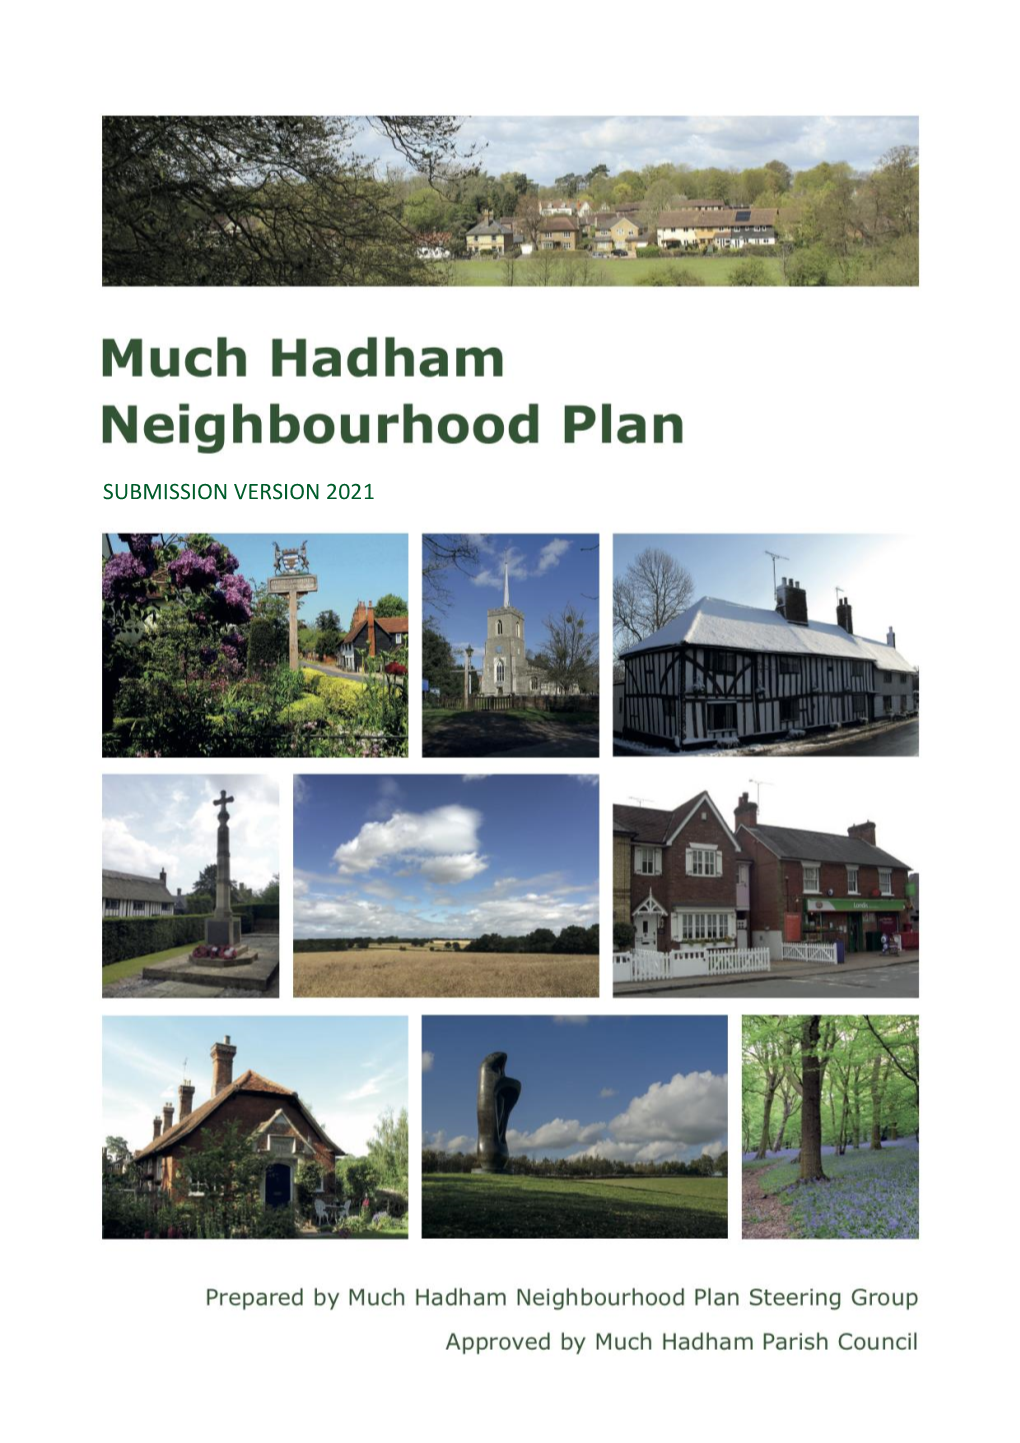 The Much Hadham Neighbourhood Plan